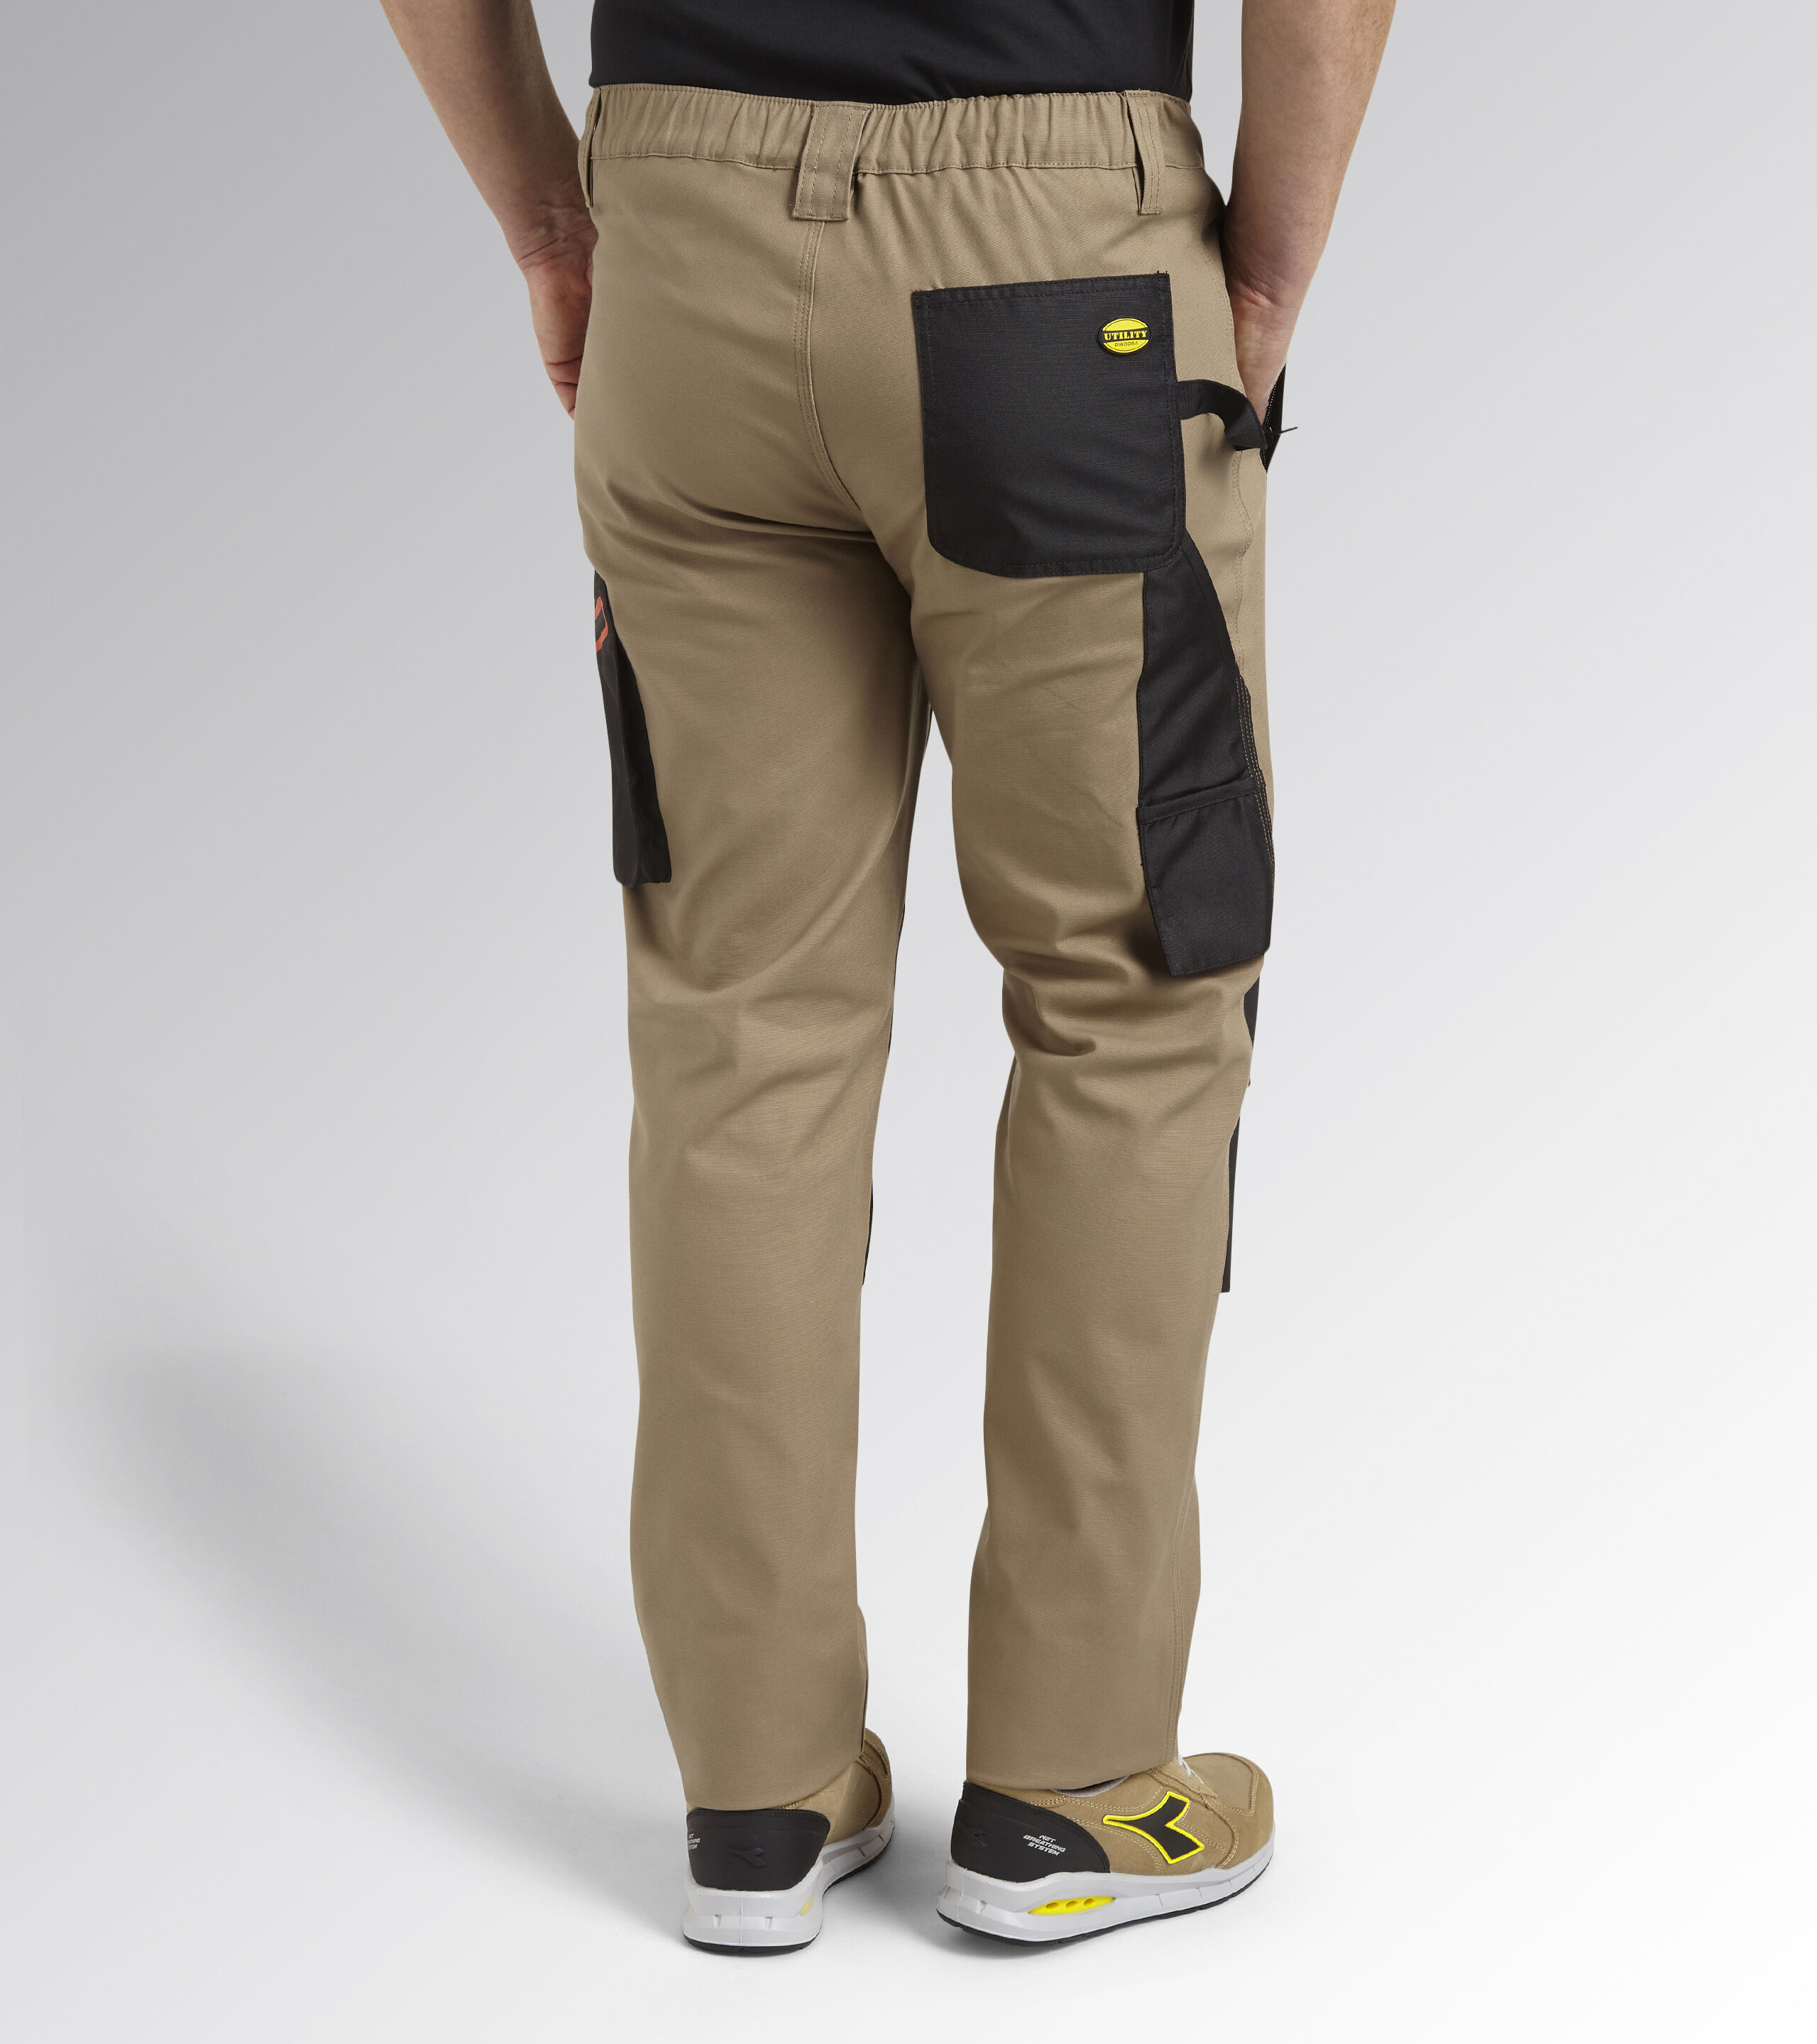 Mens Cotton Combat Active Outdoor Walking Work Trousers 28  30 beige Khaki   eBay